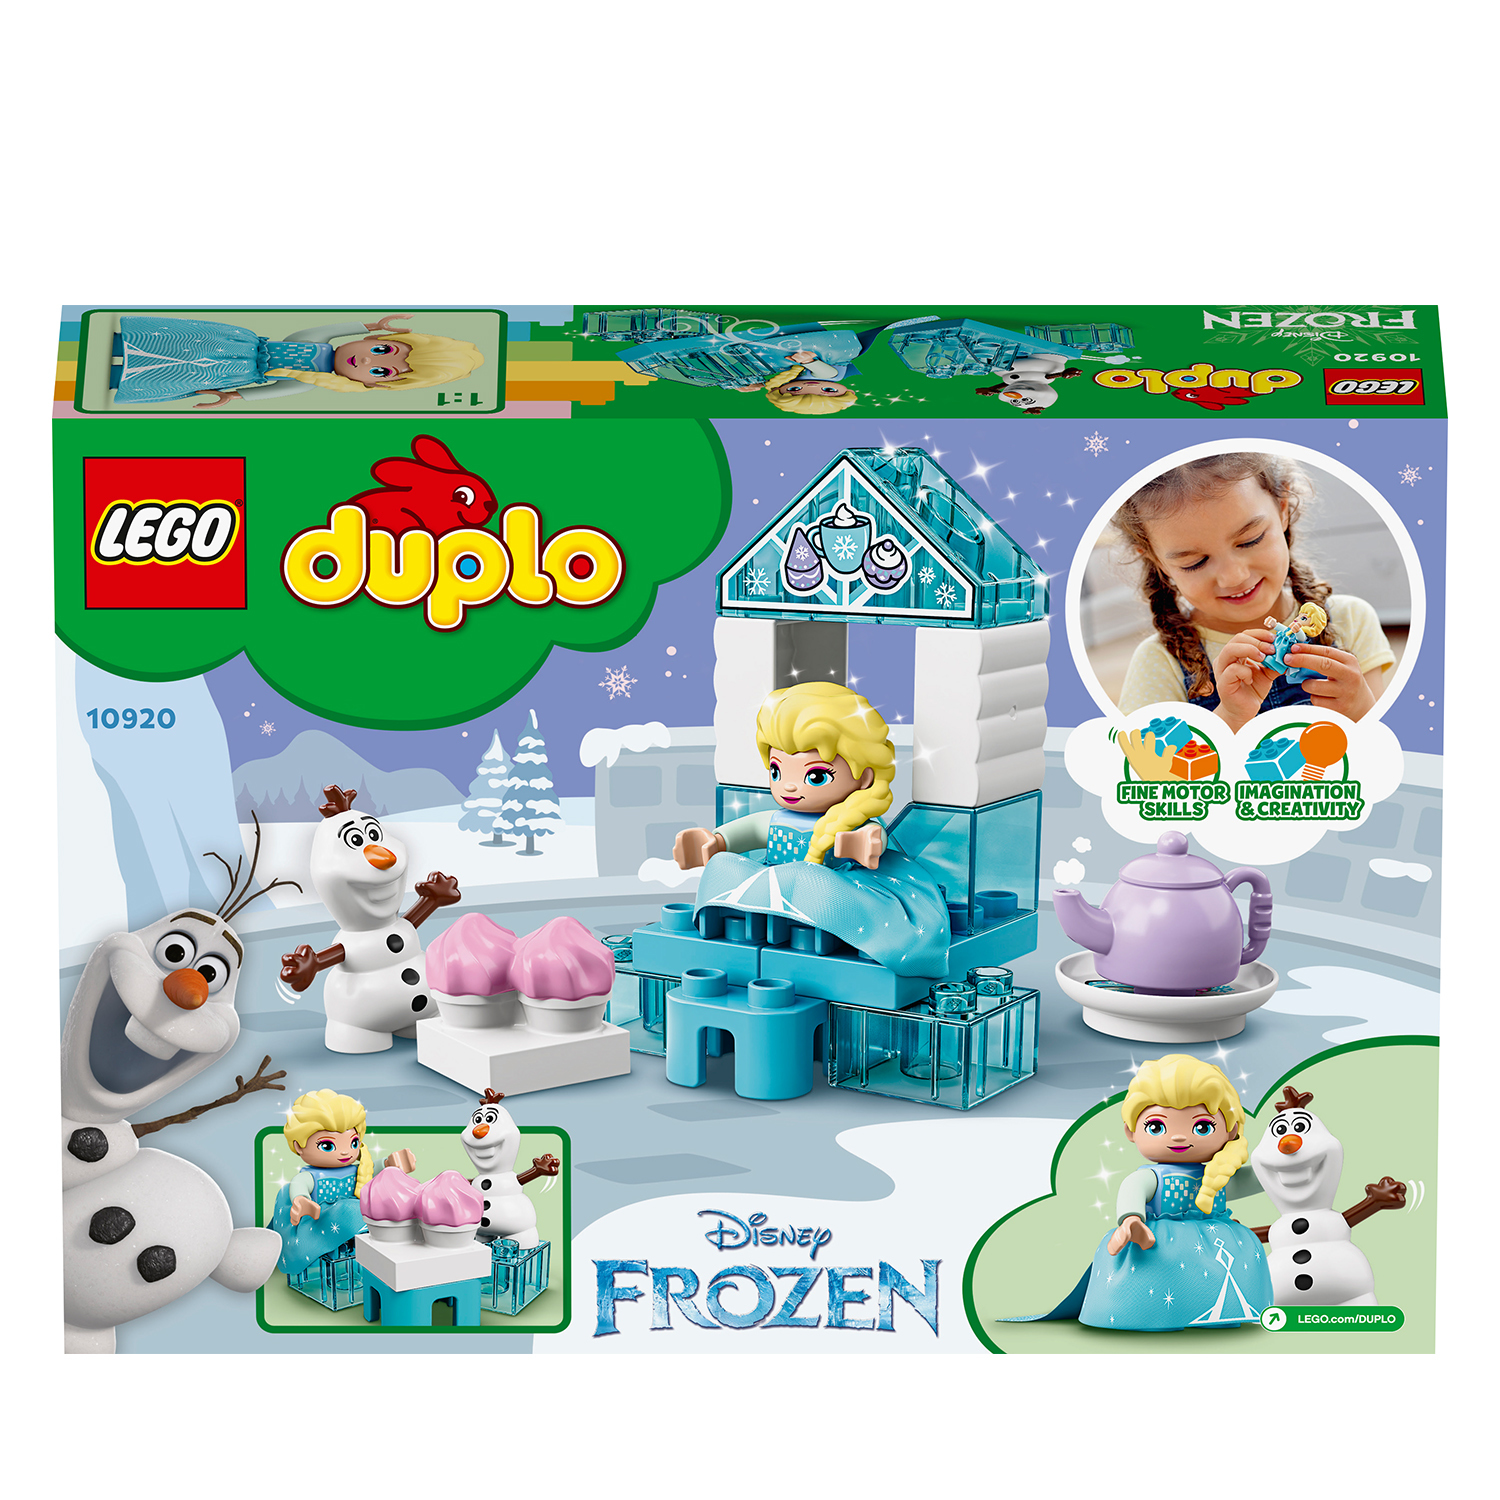 LEGO DUPLO Elsas und Olafs Eis-Café